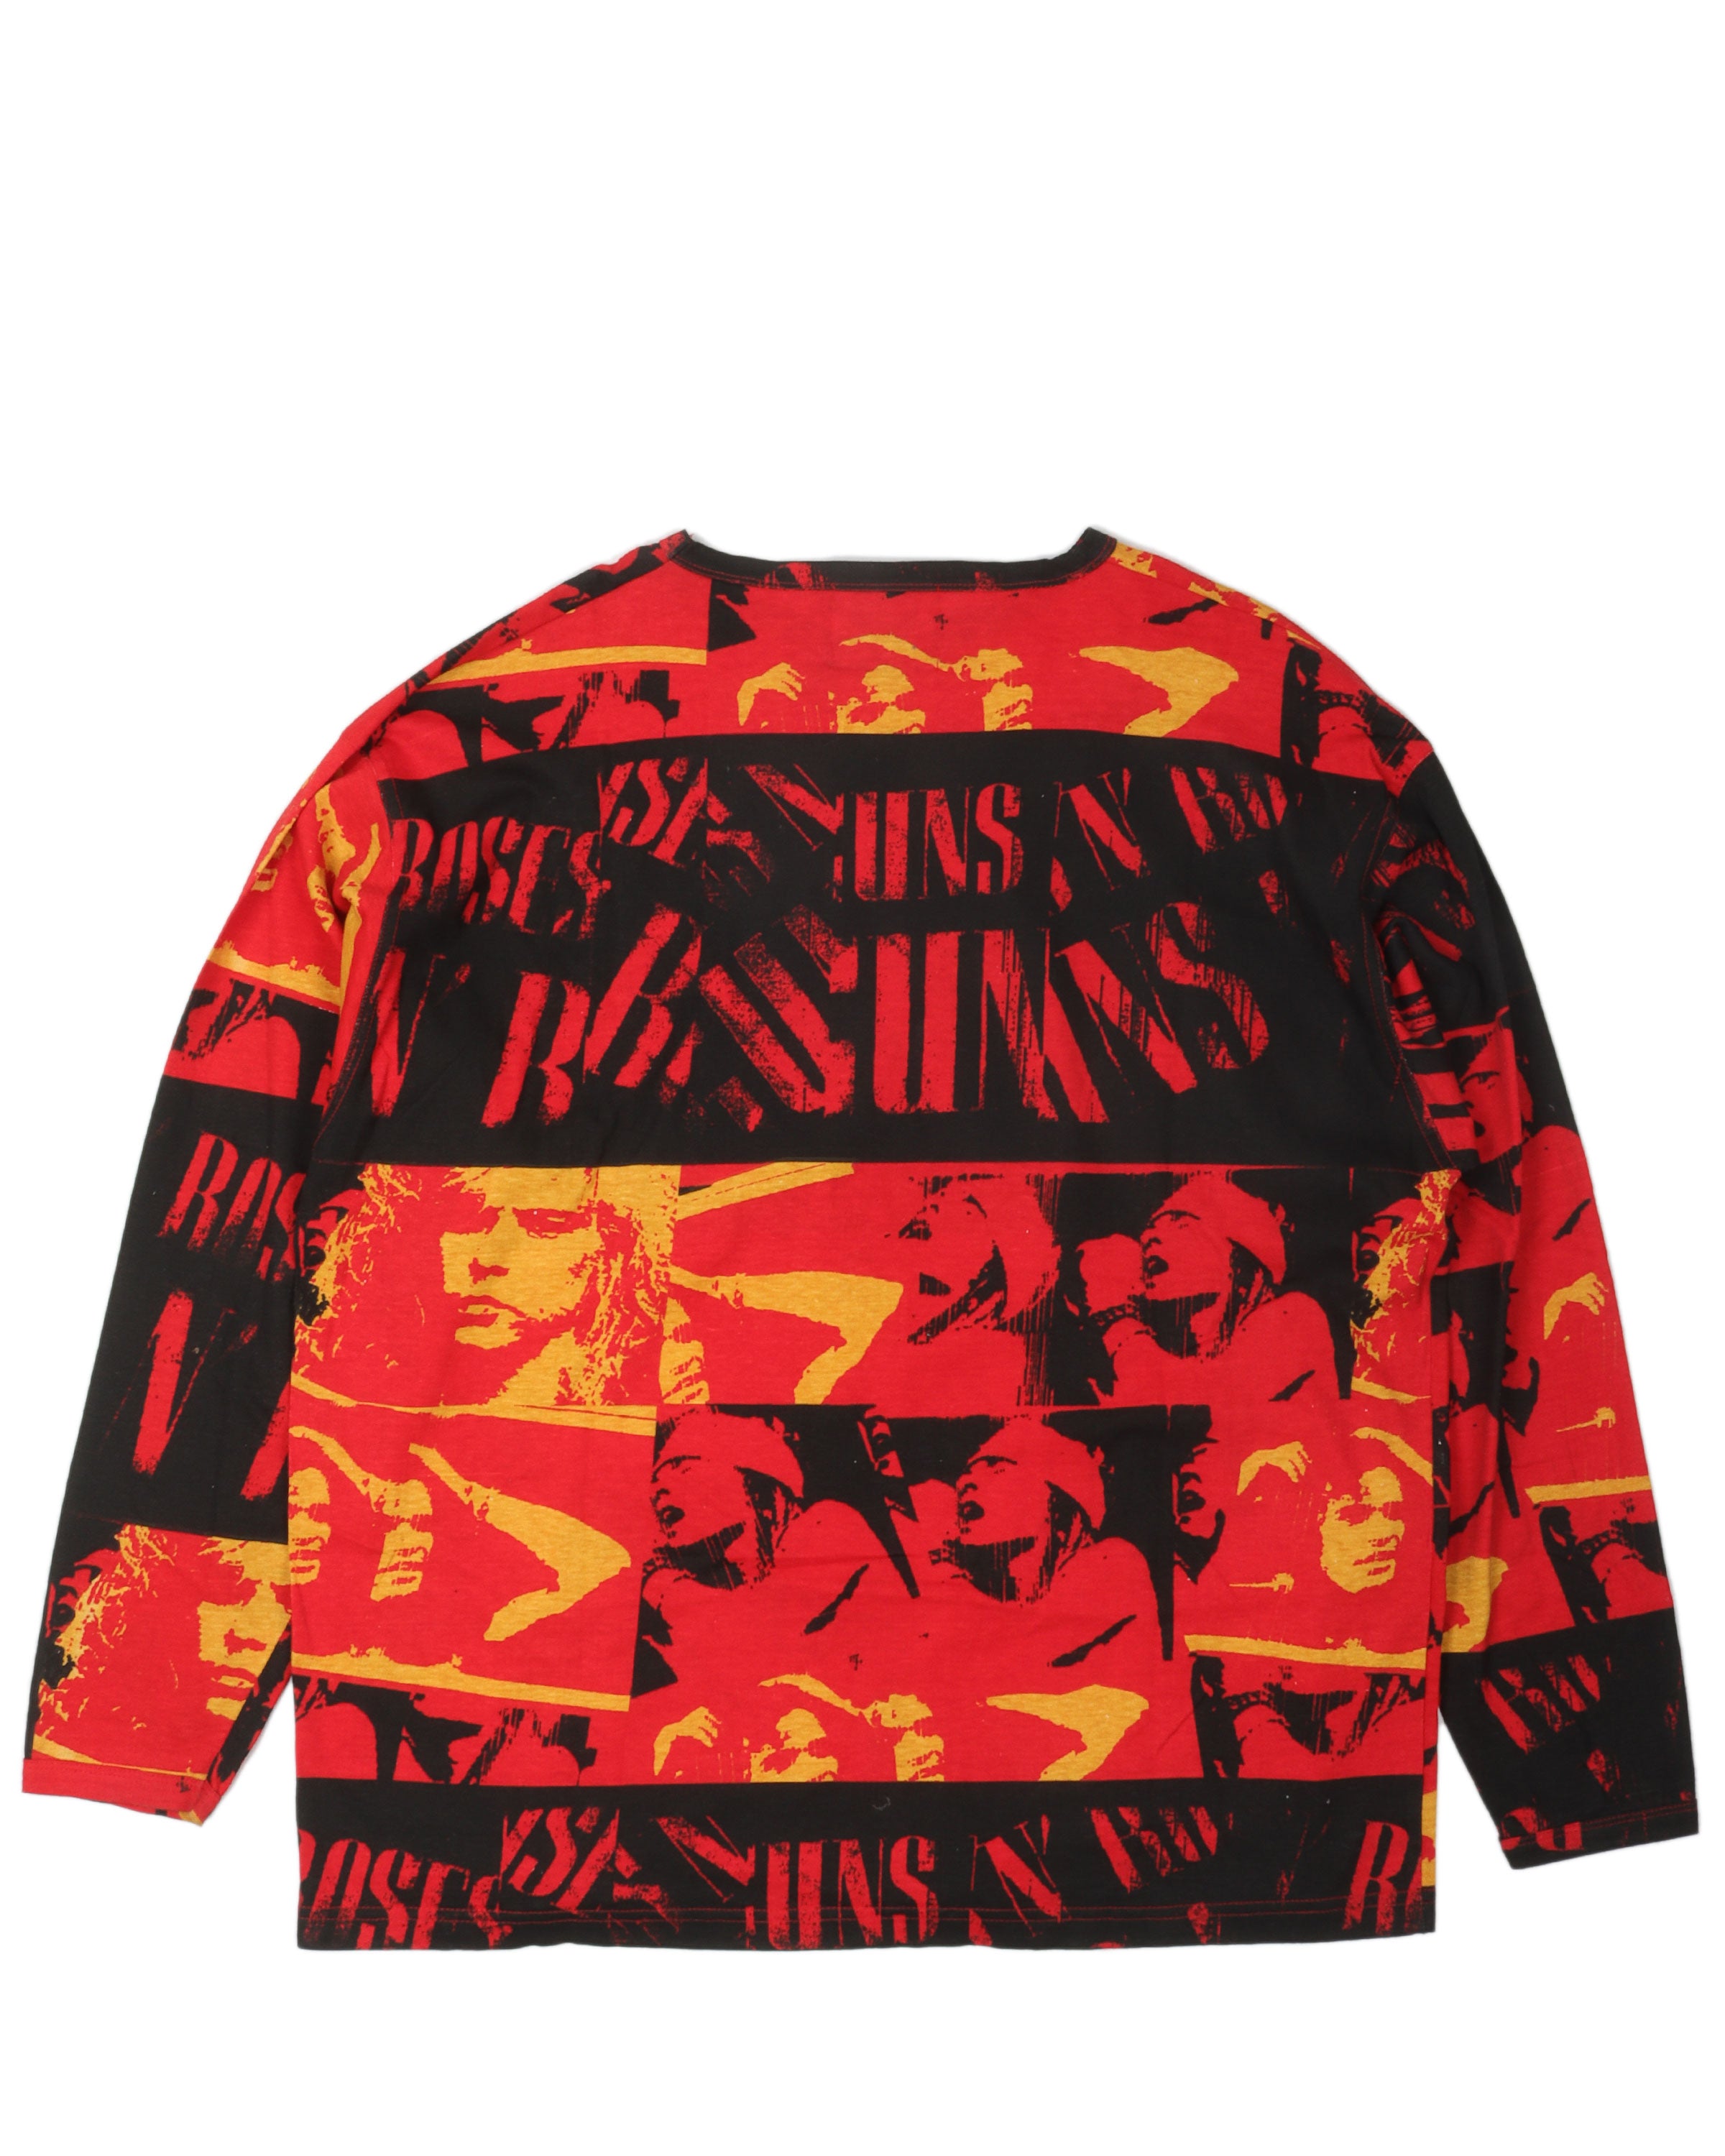 Guns N Roses All Over Print Long Sleeeve T-Shirt